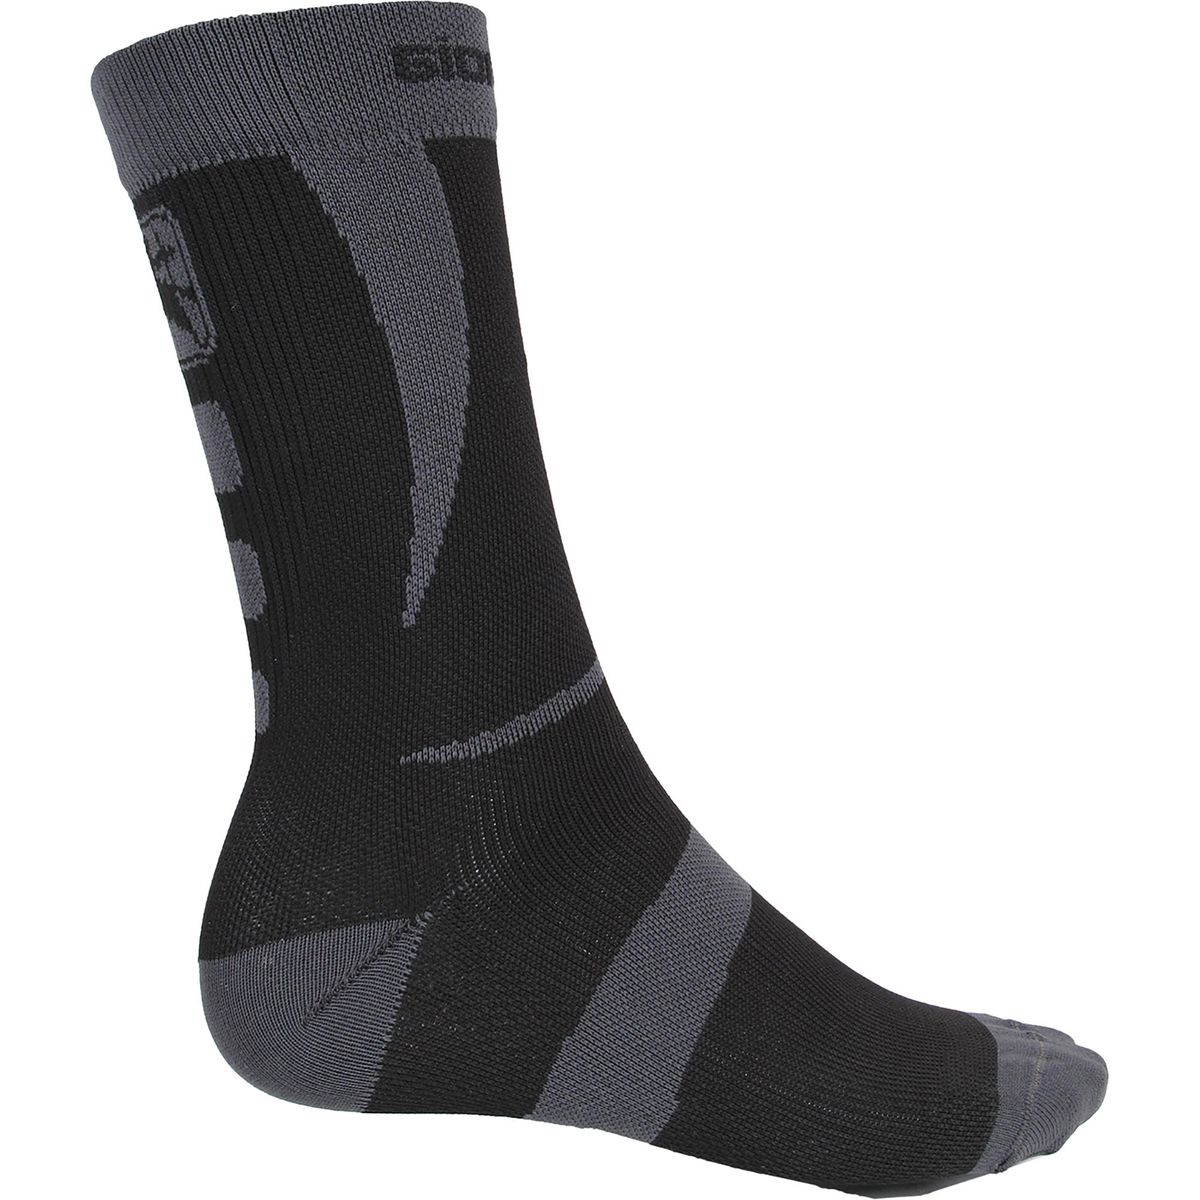 Giordana Gradual Compression Knee Height Socks - Men's